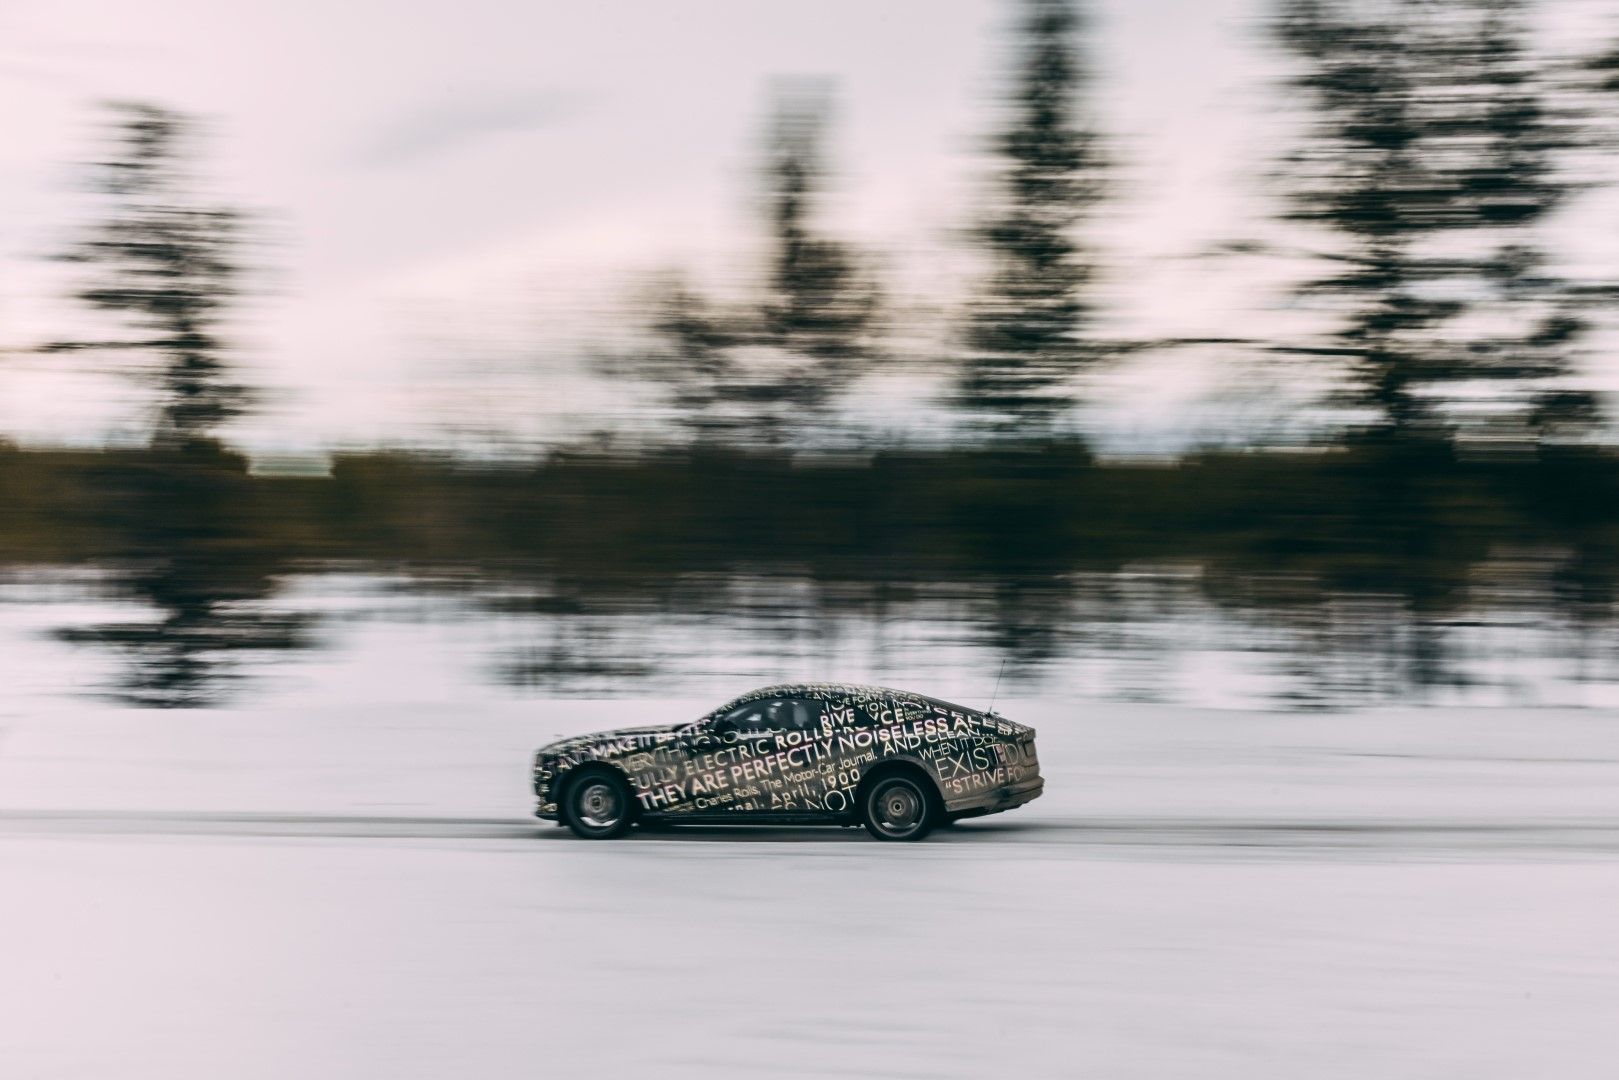 H Rolls-Royce Spectre τεστάρει τις αντόχές της στα χιόνια!